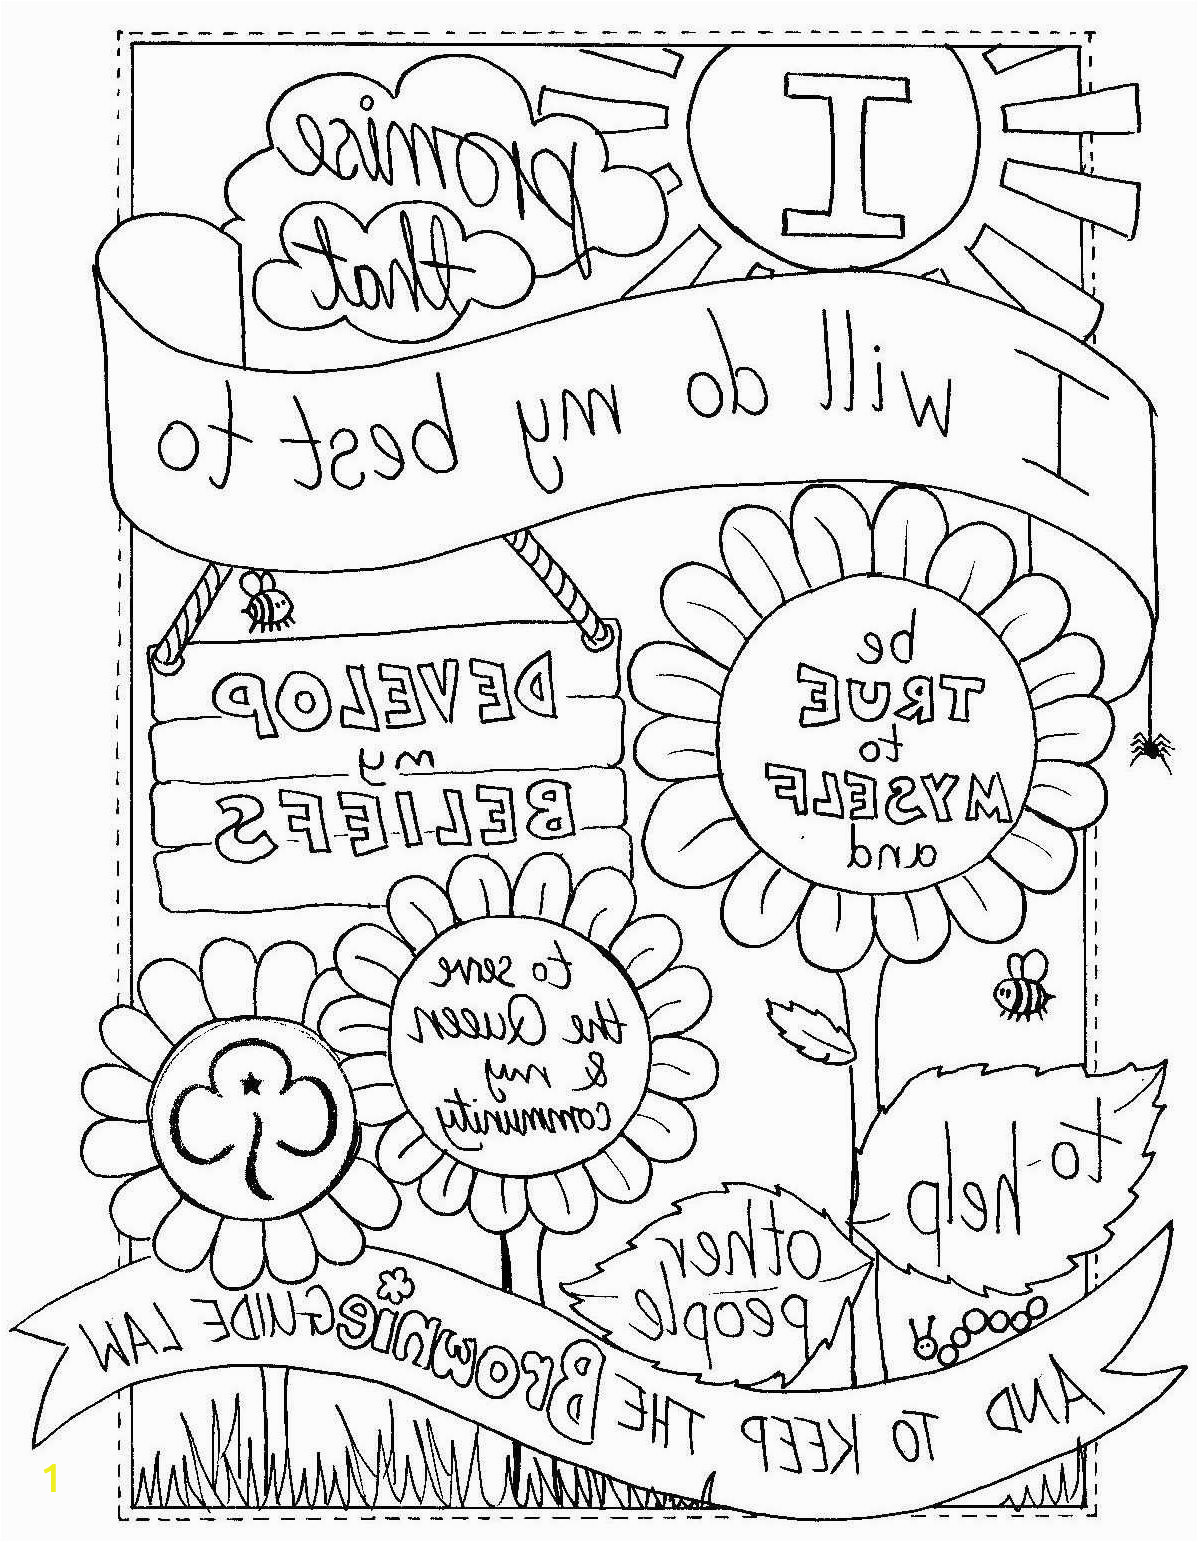 Girl Scout Coloring Pages Printable 75 Unique Stock Girl Scout Coloring Pages Check More at